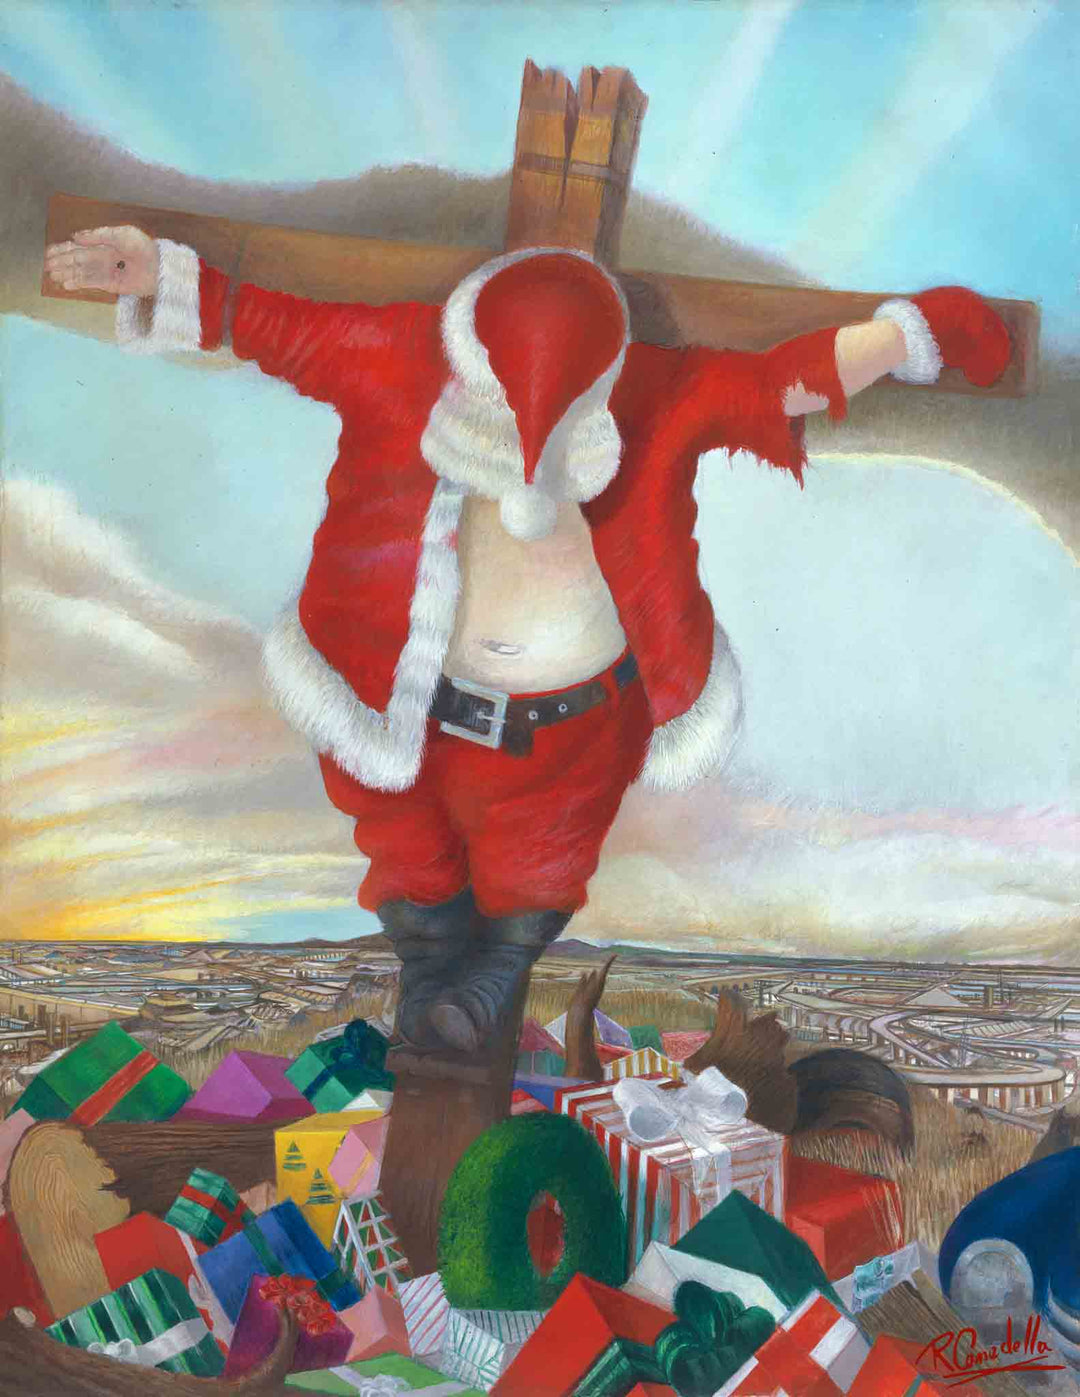 Presence of Man Santa Claus Saint Nick St. Nick Jesus Christ Gifts Presents Christmas Commercialism Capitalism